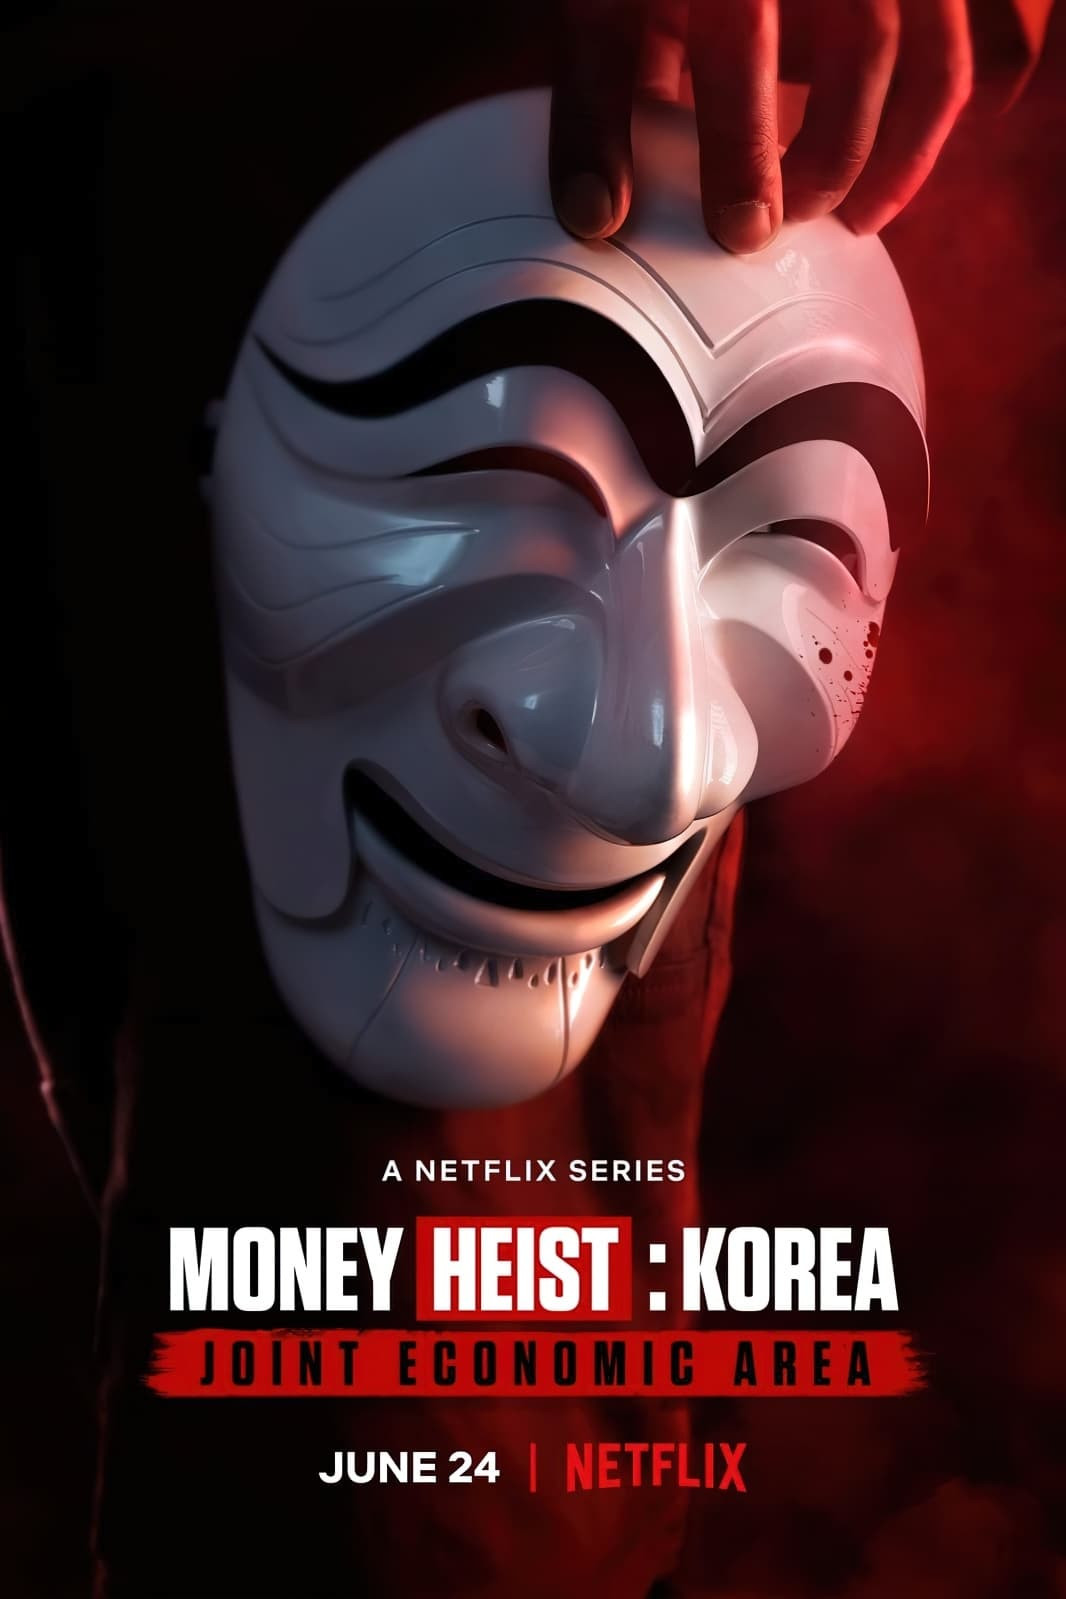 Money Heist : Korea Joint Economic Area ทรชนคนปล้นโลก เกาหลีเดือด